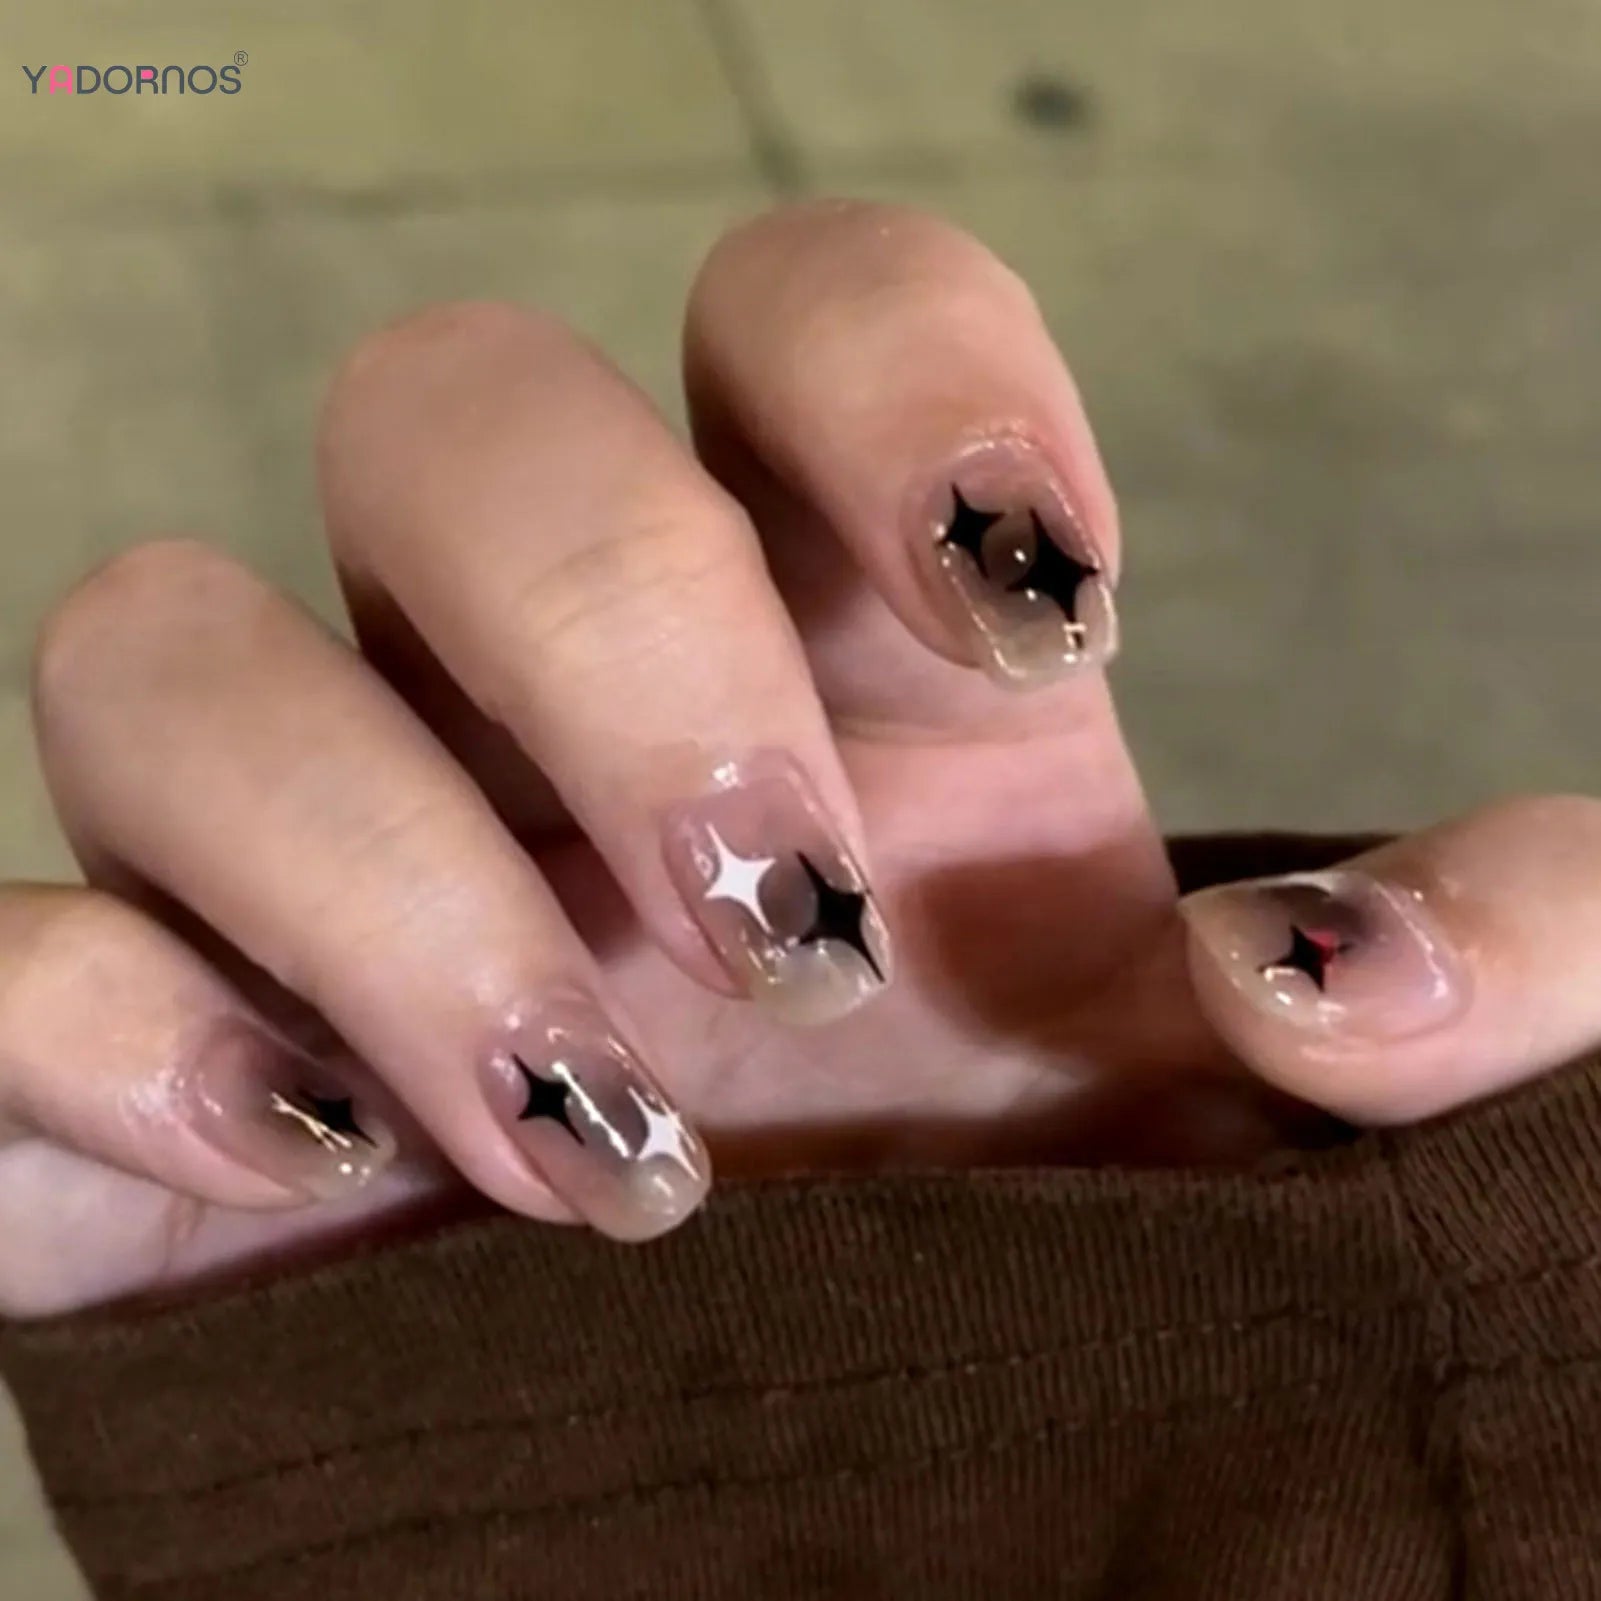 Y2K Black White Star Artificial Fute Nails Copertura completa Short False Unghia Removible Press on Nails for Women Girls Girl Manicure Art Art